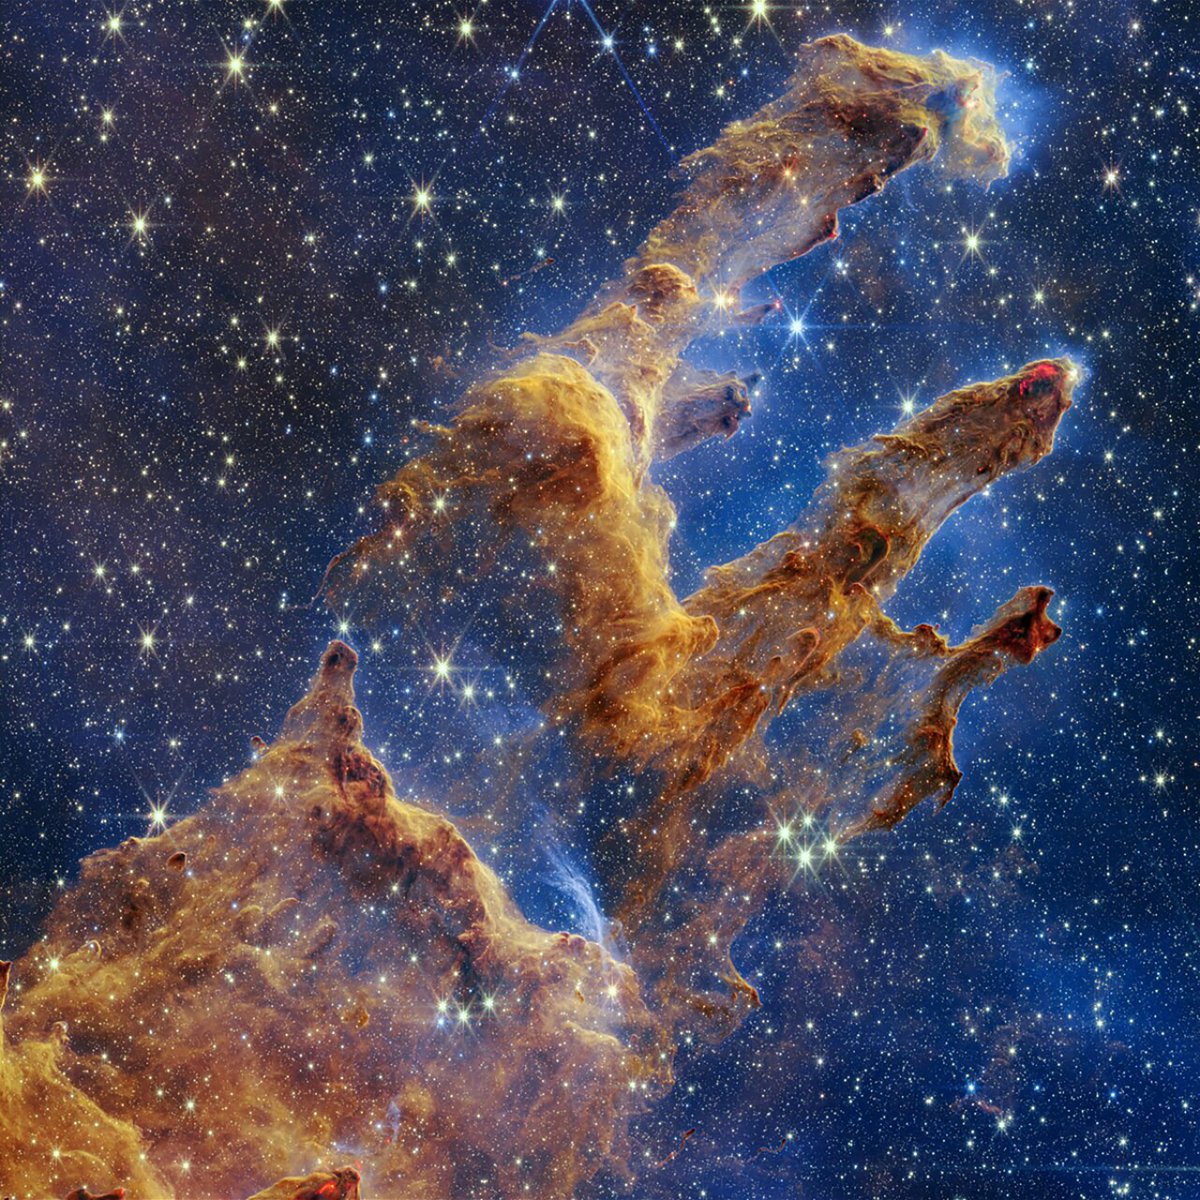 <i>NASA/ESA/CSA/STScI</i><br/>NASA shared an image of the Pillars of Creation